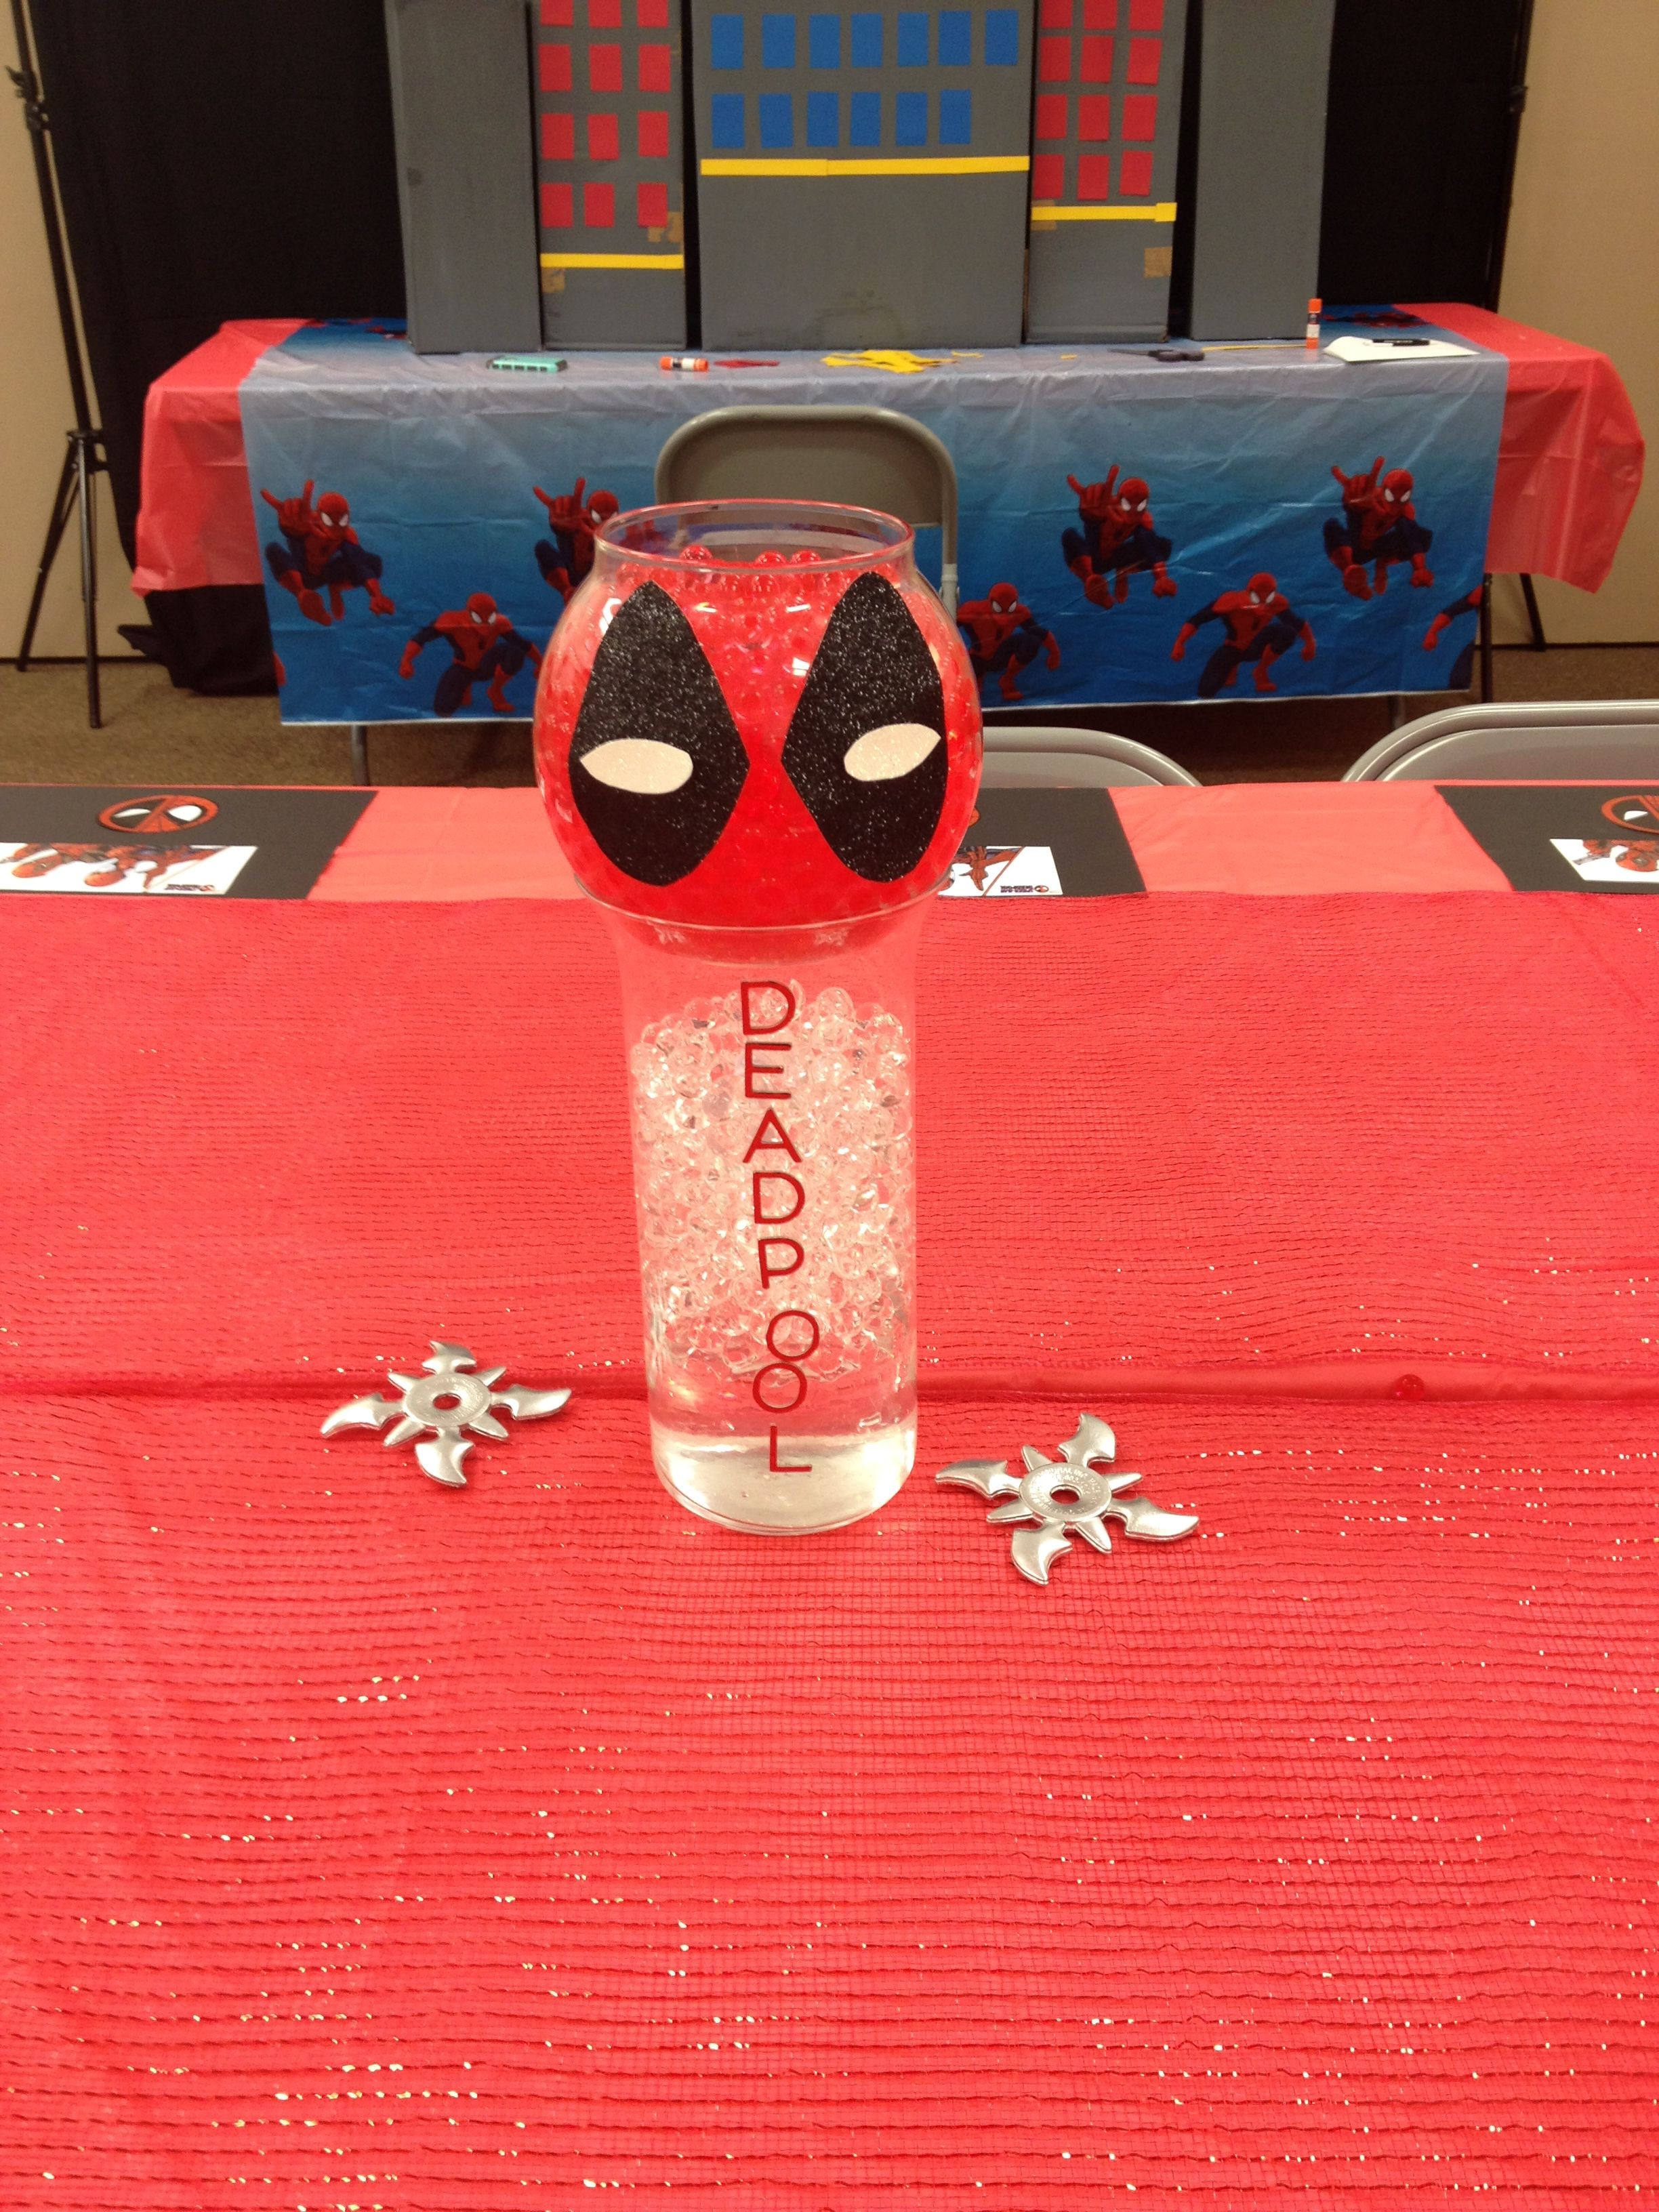 Deadpool Birthday Decorations
 Spider man vs Deadpool Birthday Party 4